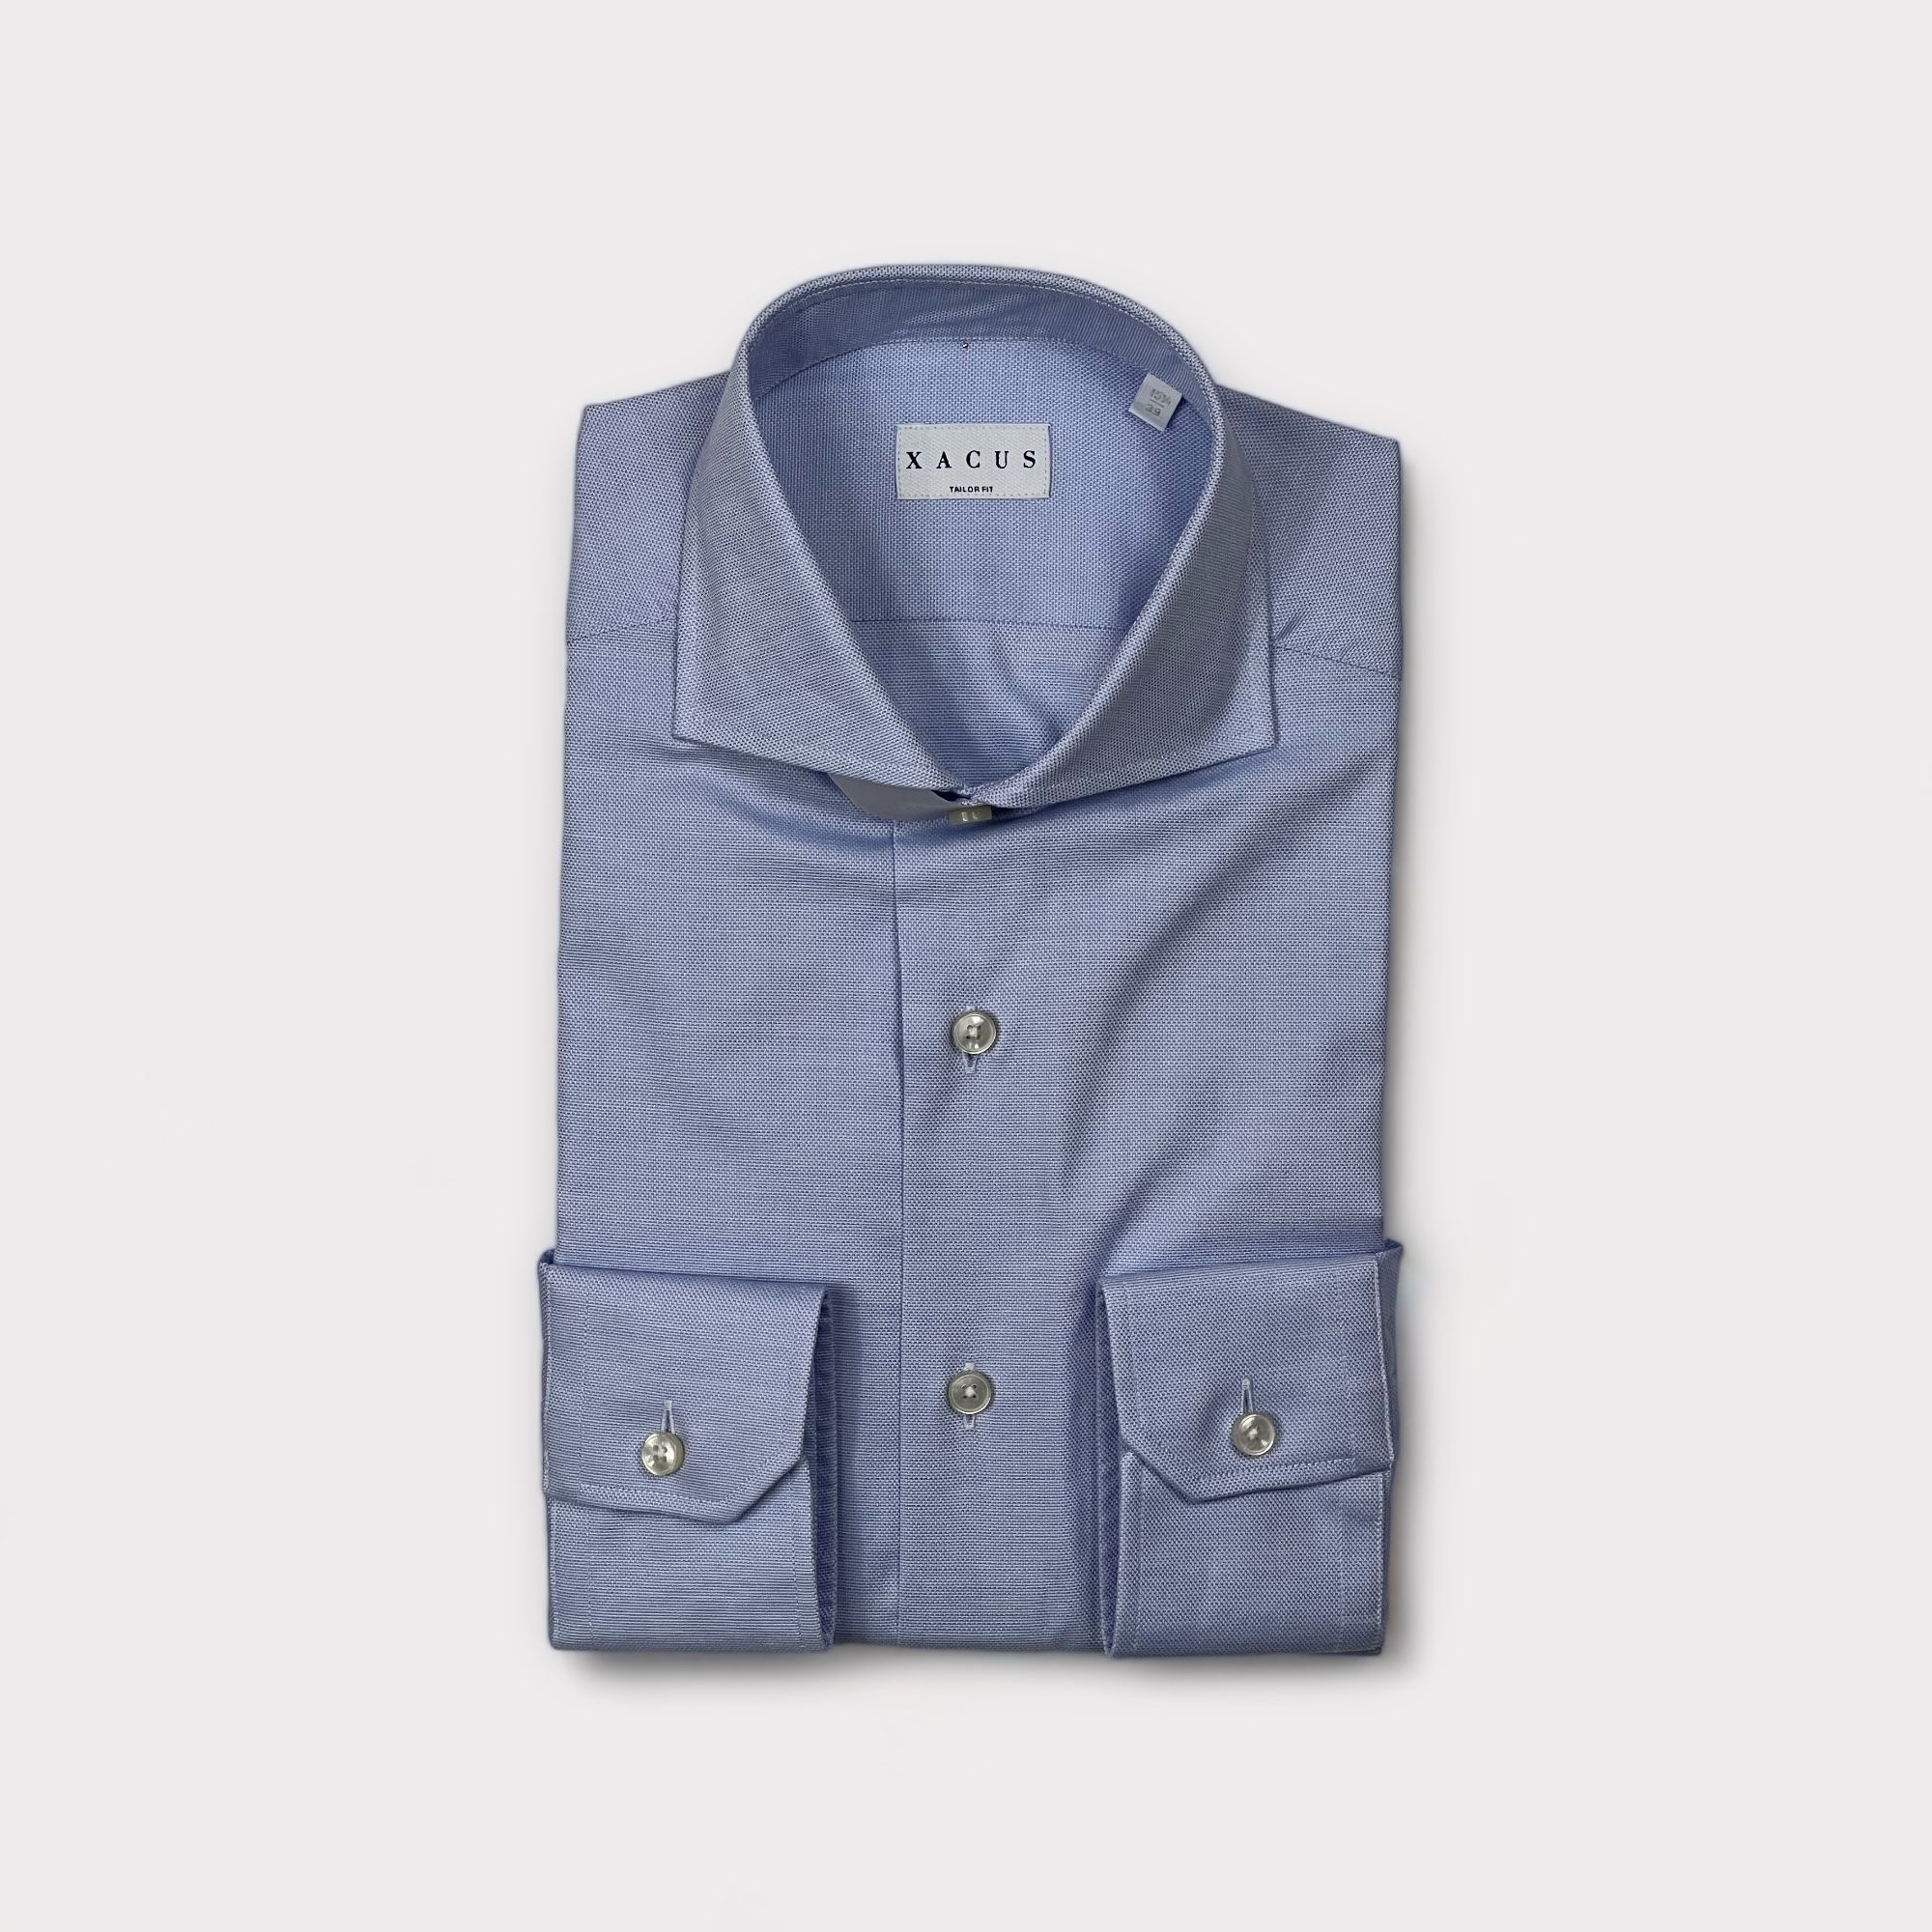 Xacus - Camicia con collo francese in puro cotone crocino